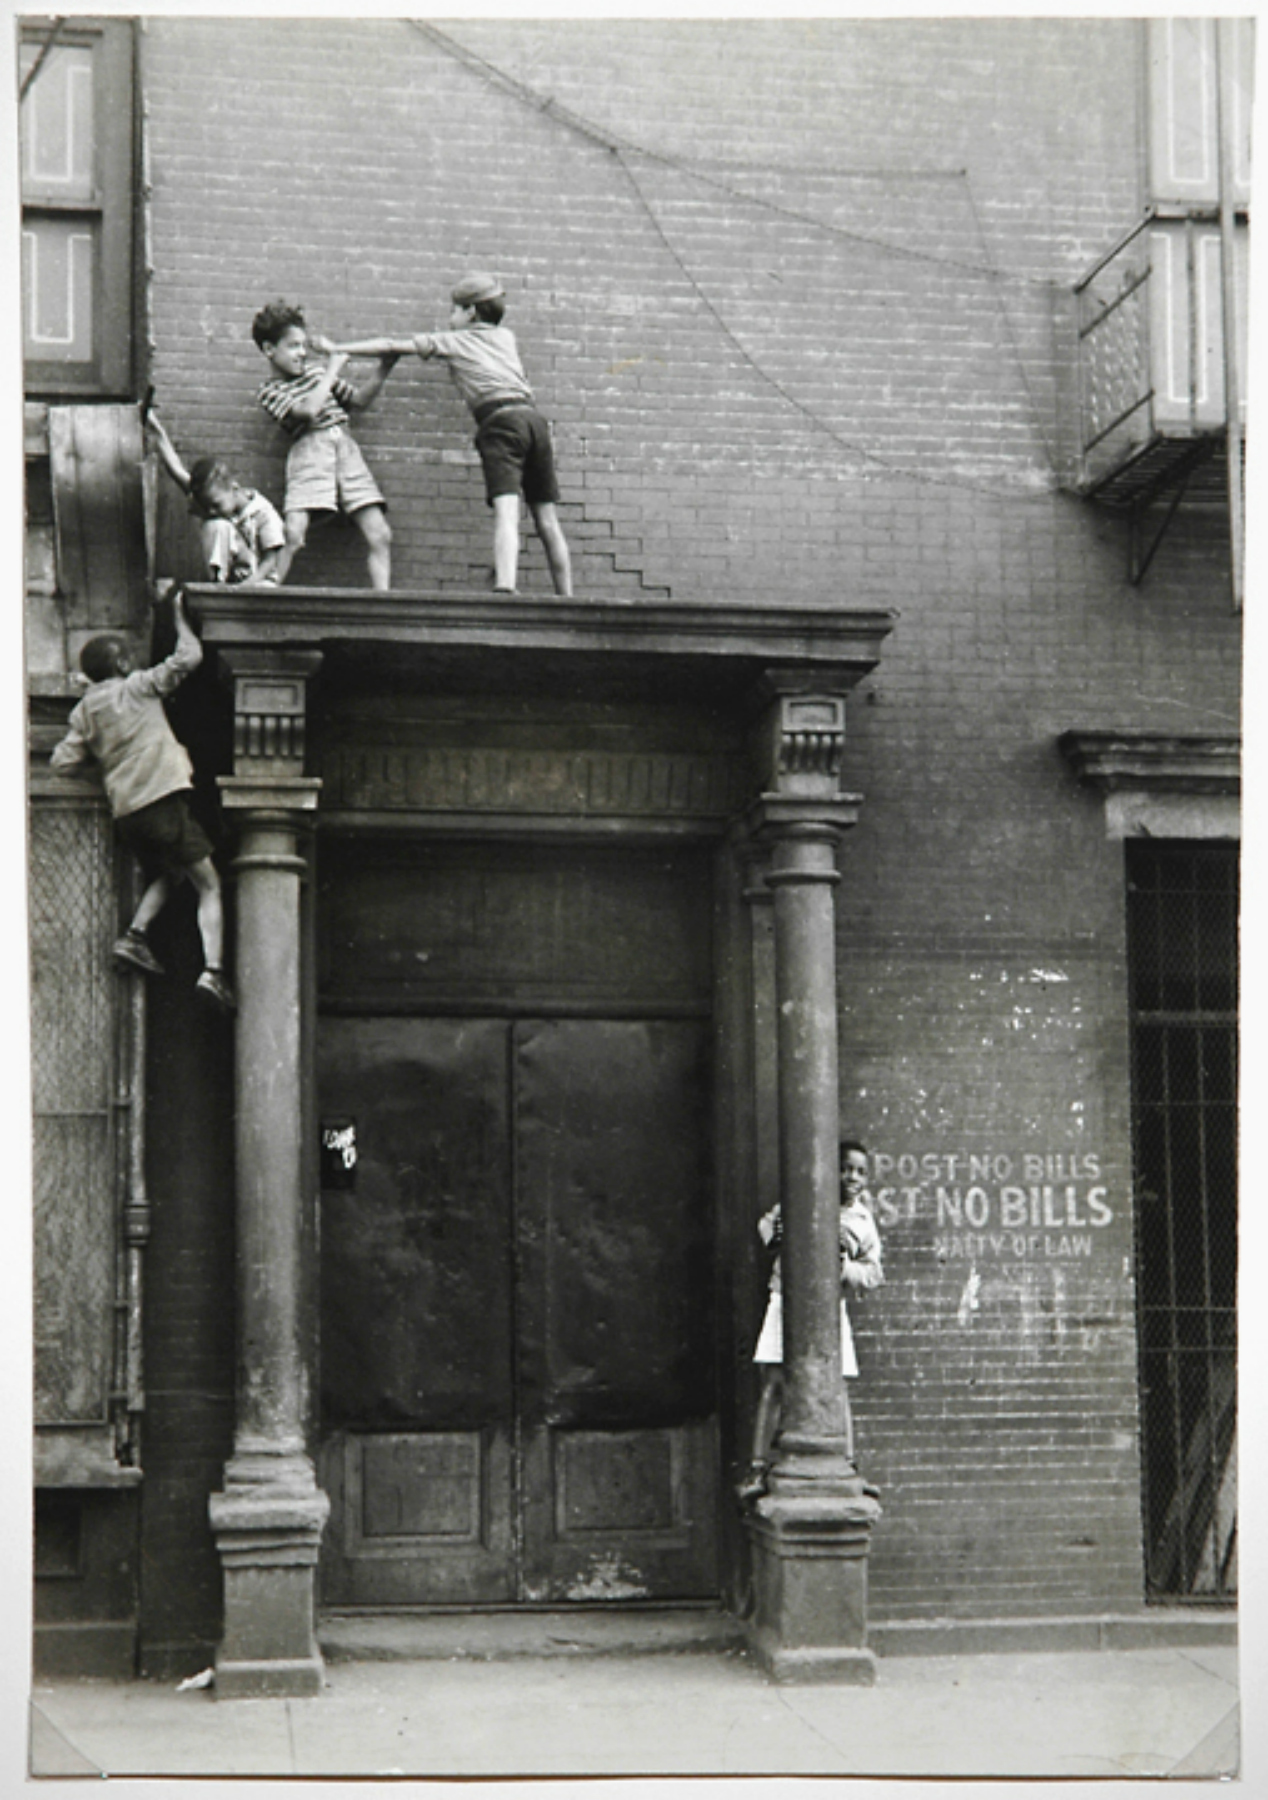 CHILD'S PLAY...Helen Levitt captures kids climbing on to a doorway